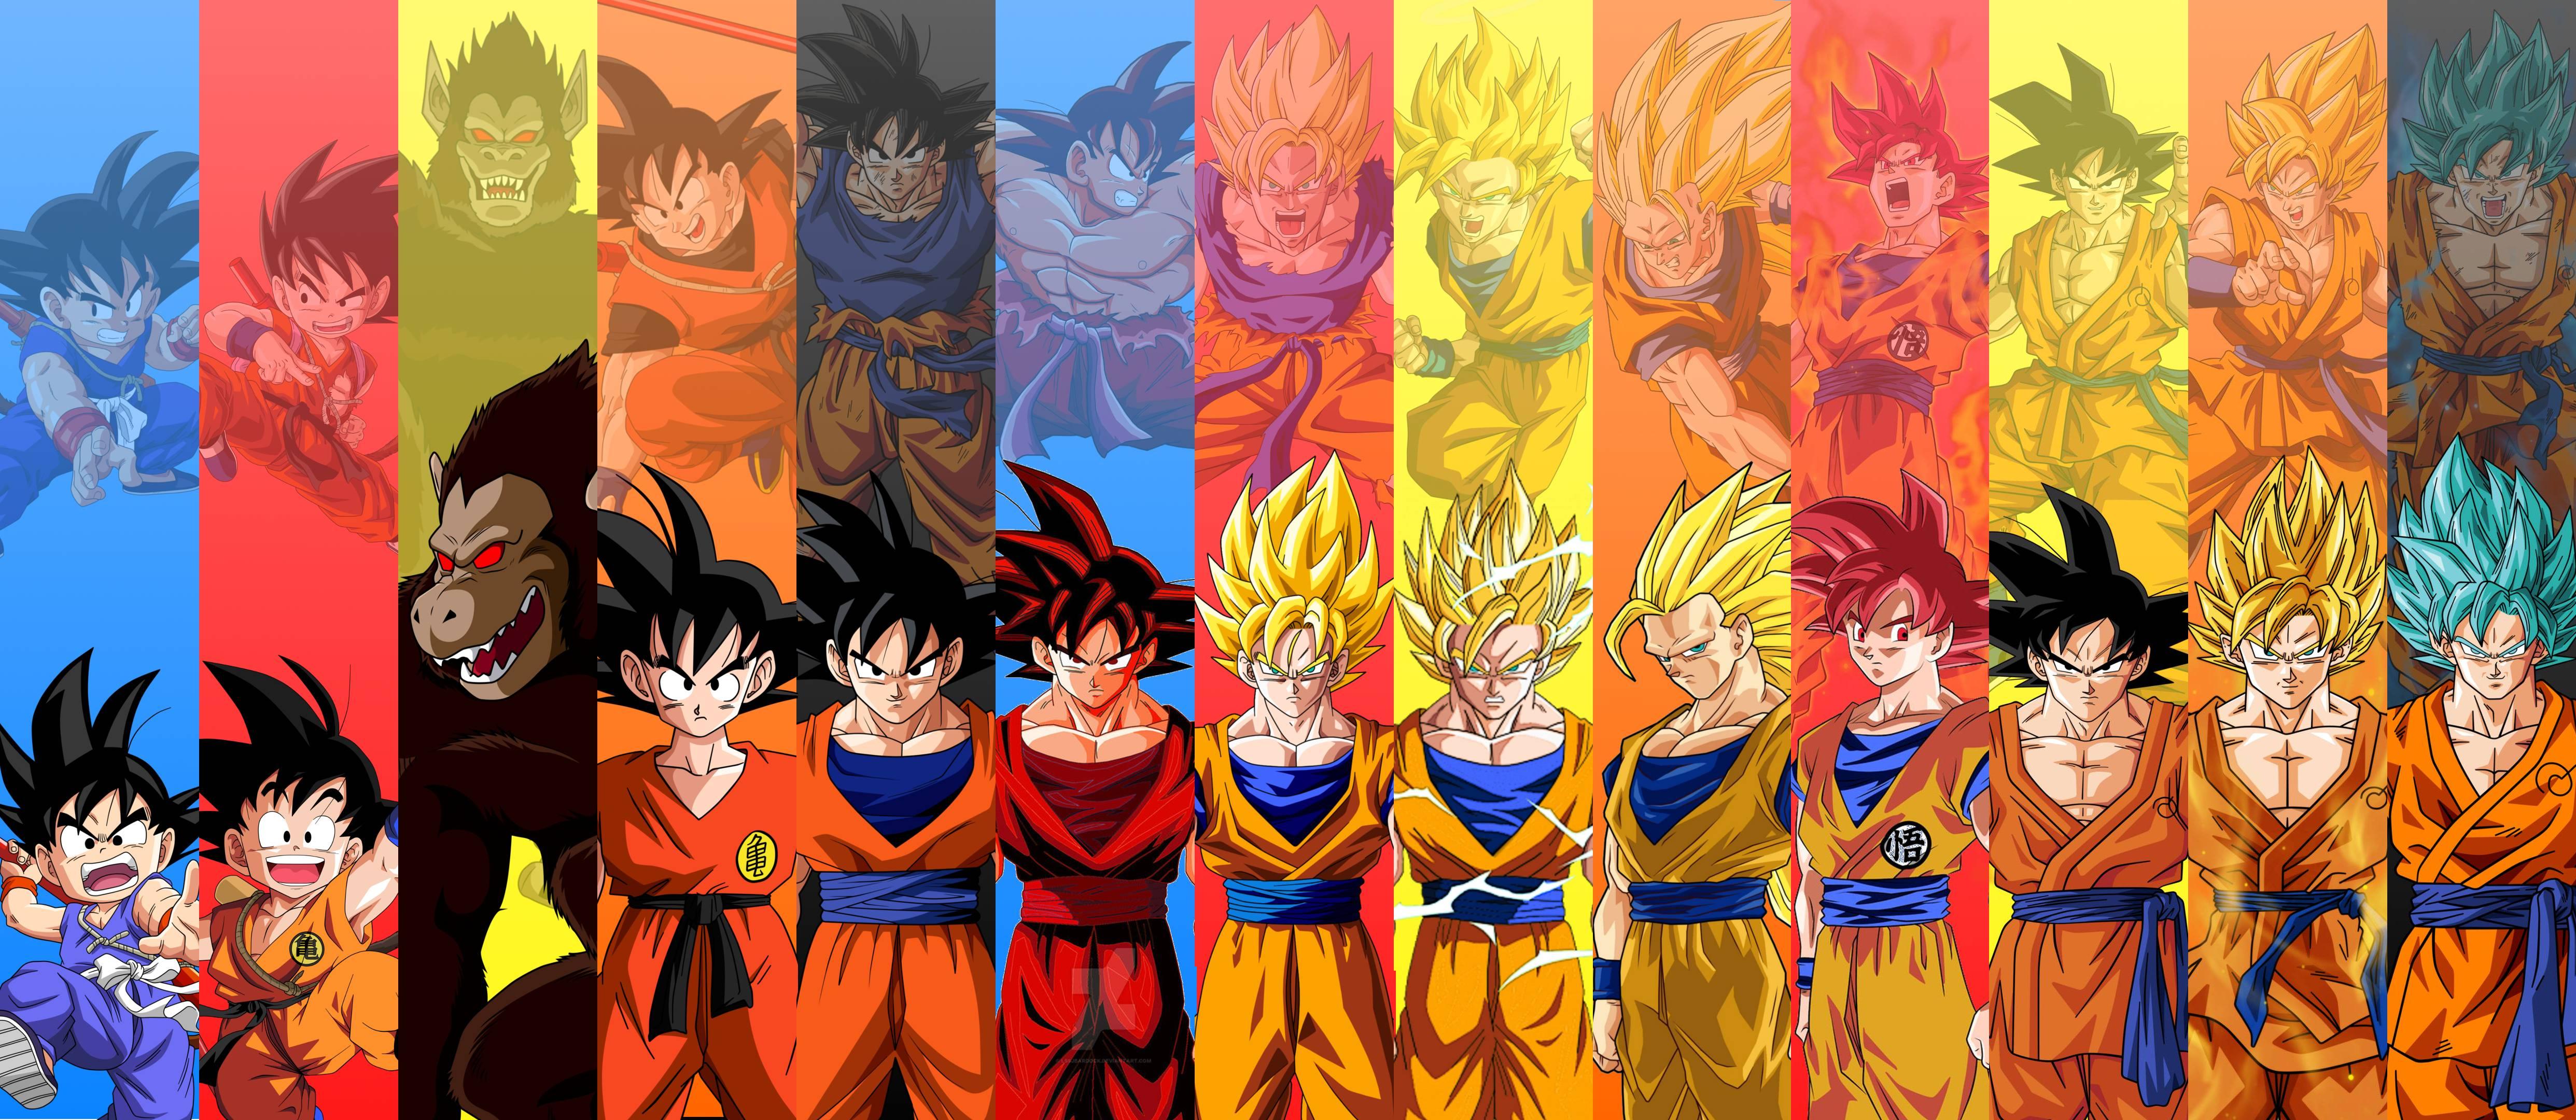 Goku Super Saiyan Wallpaper Free Goku Super Saiyan Background